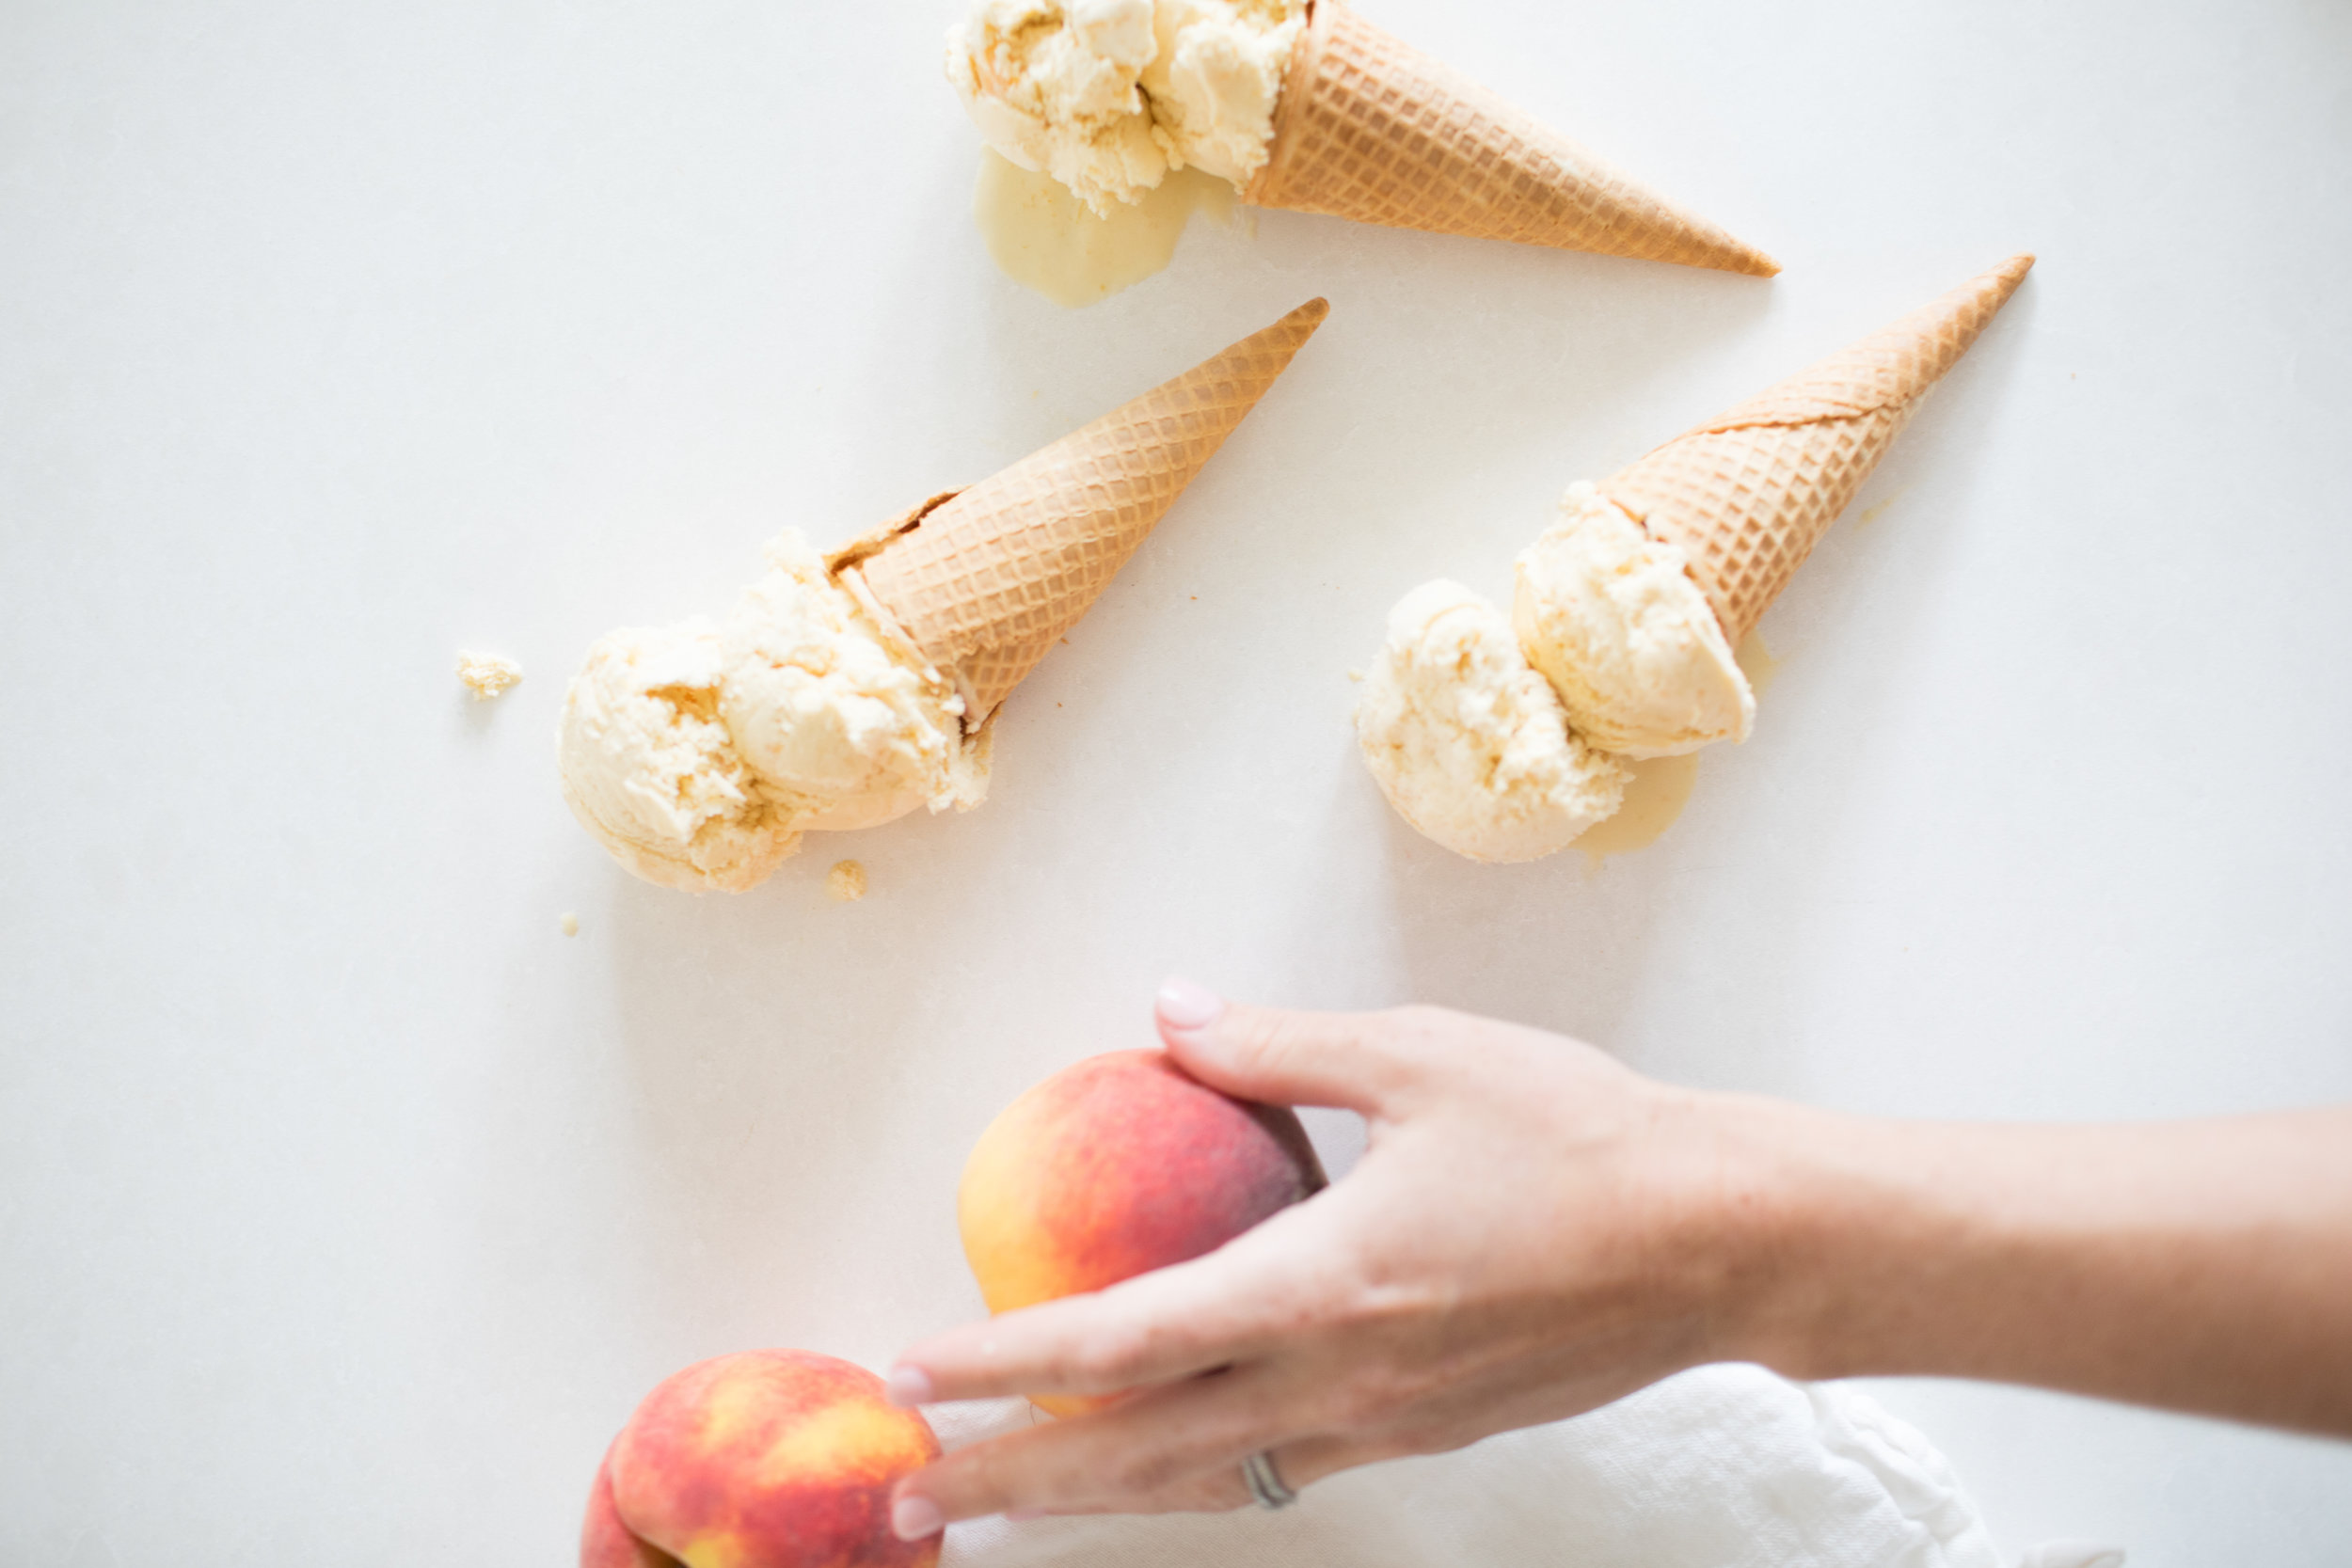 Blender Peach Ice Cream - Life Love Liz